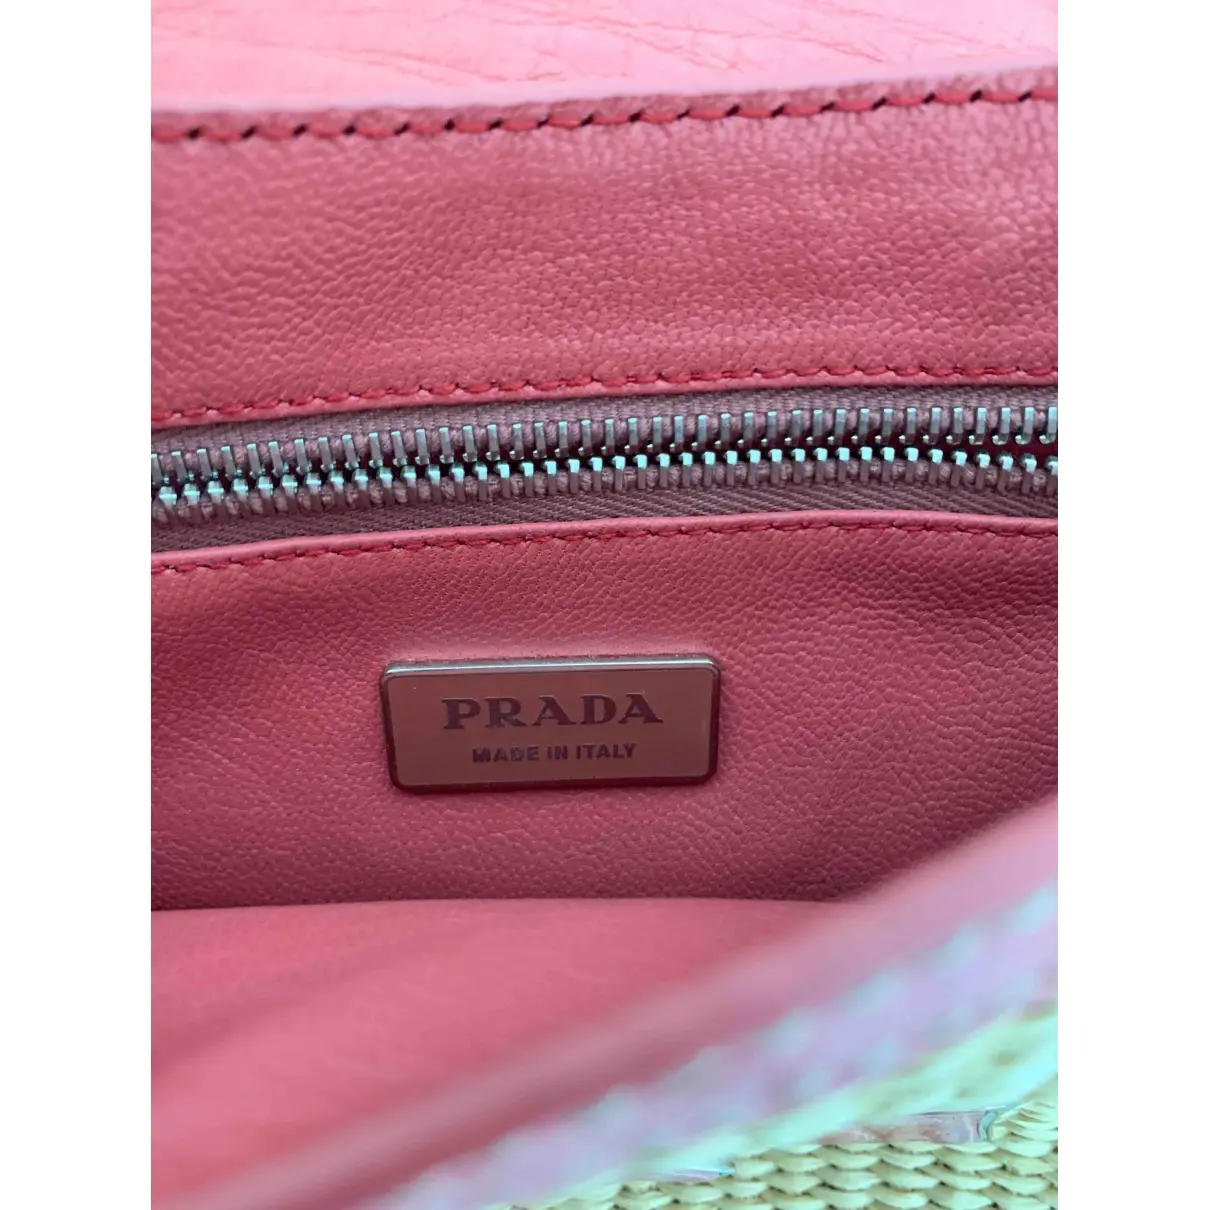 Buy Prada Ostrich handbag online